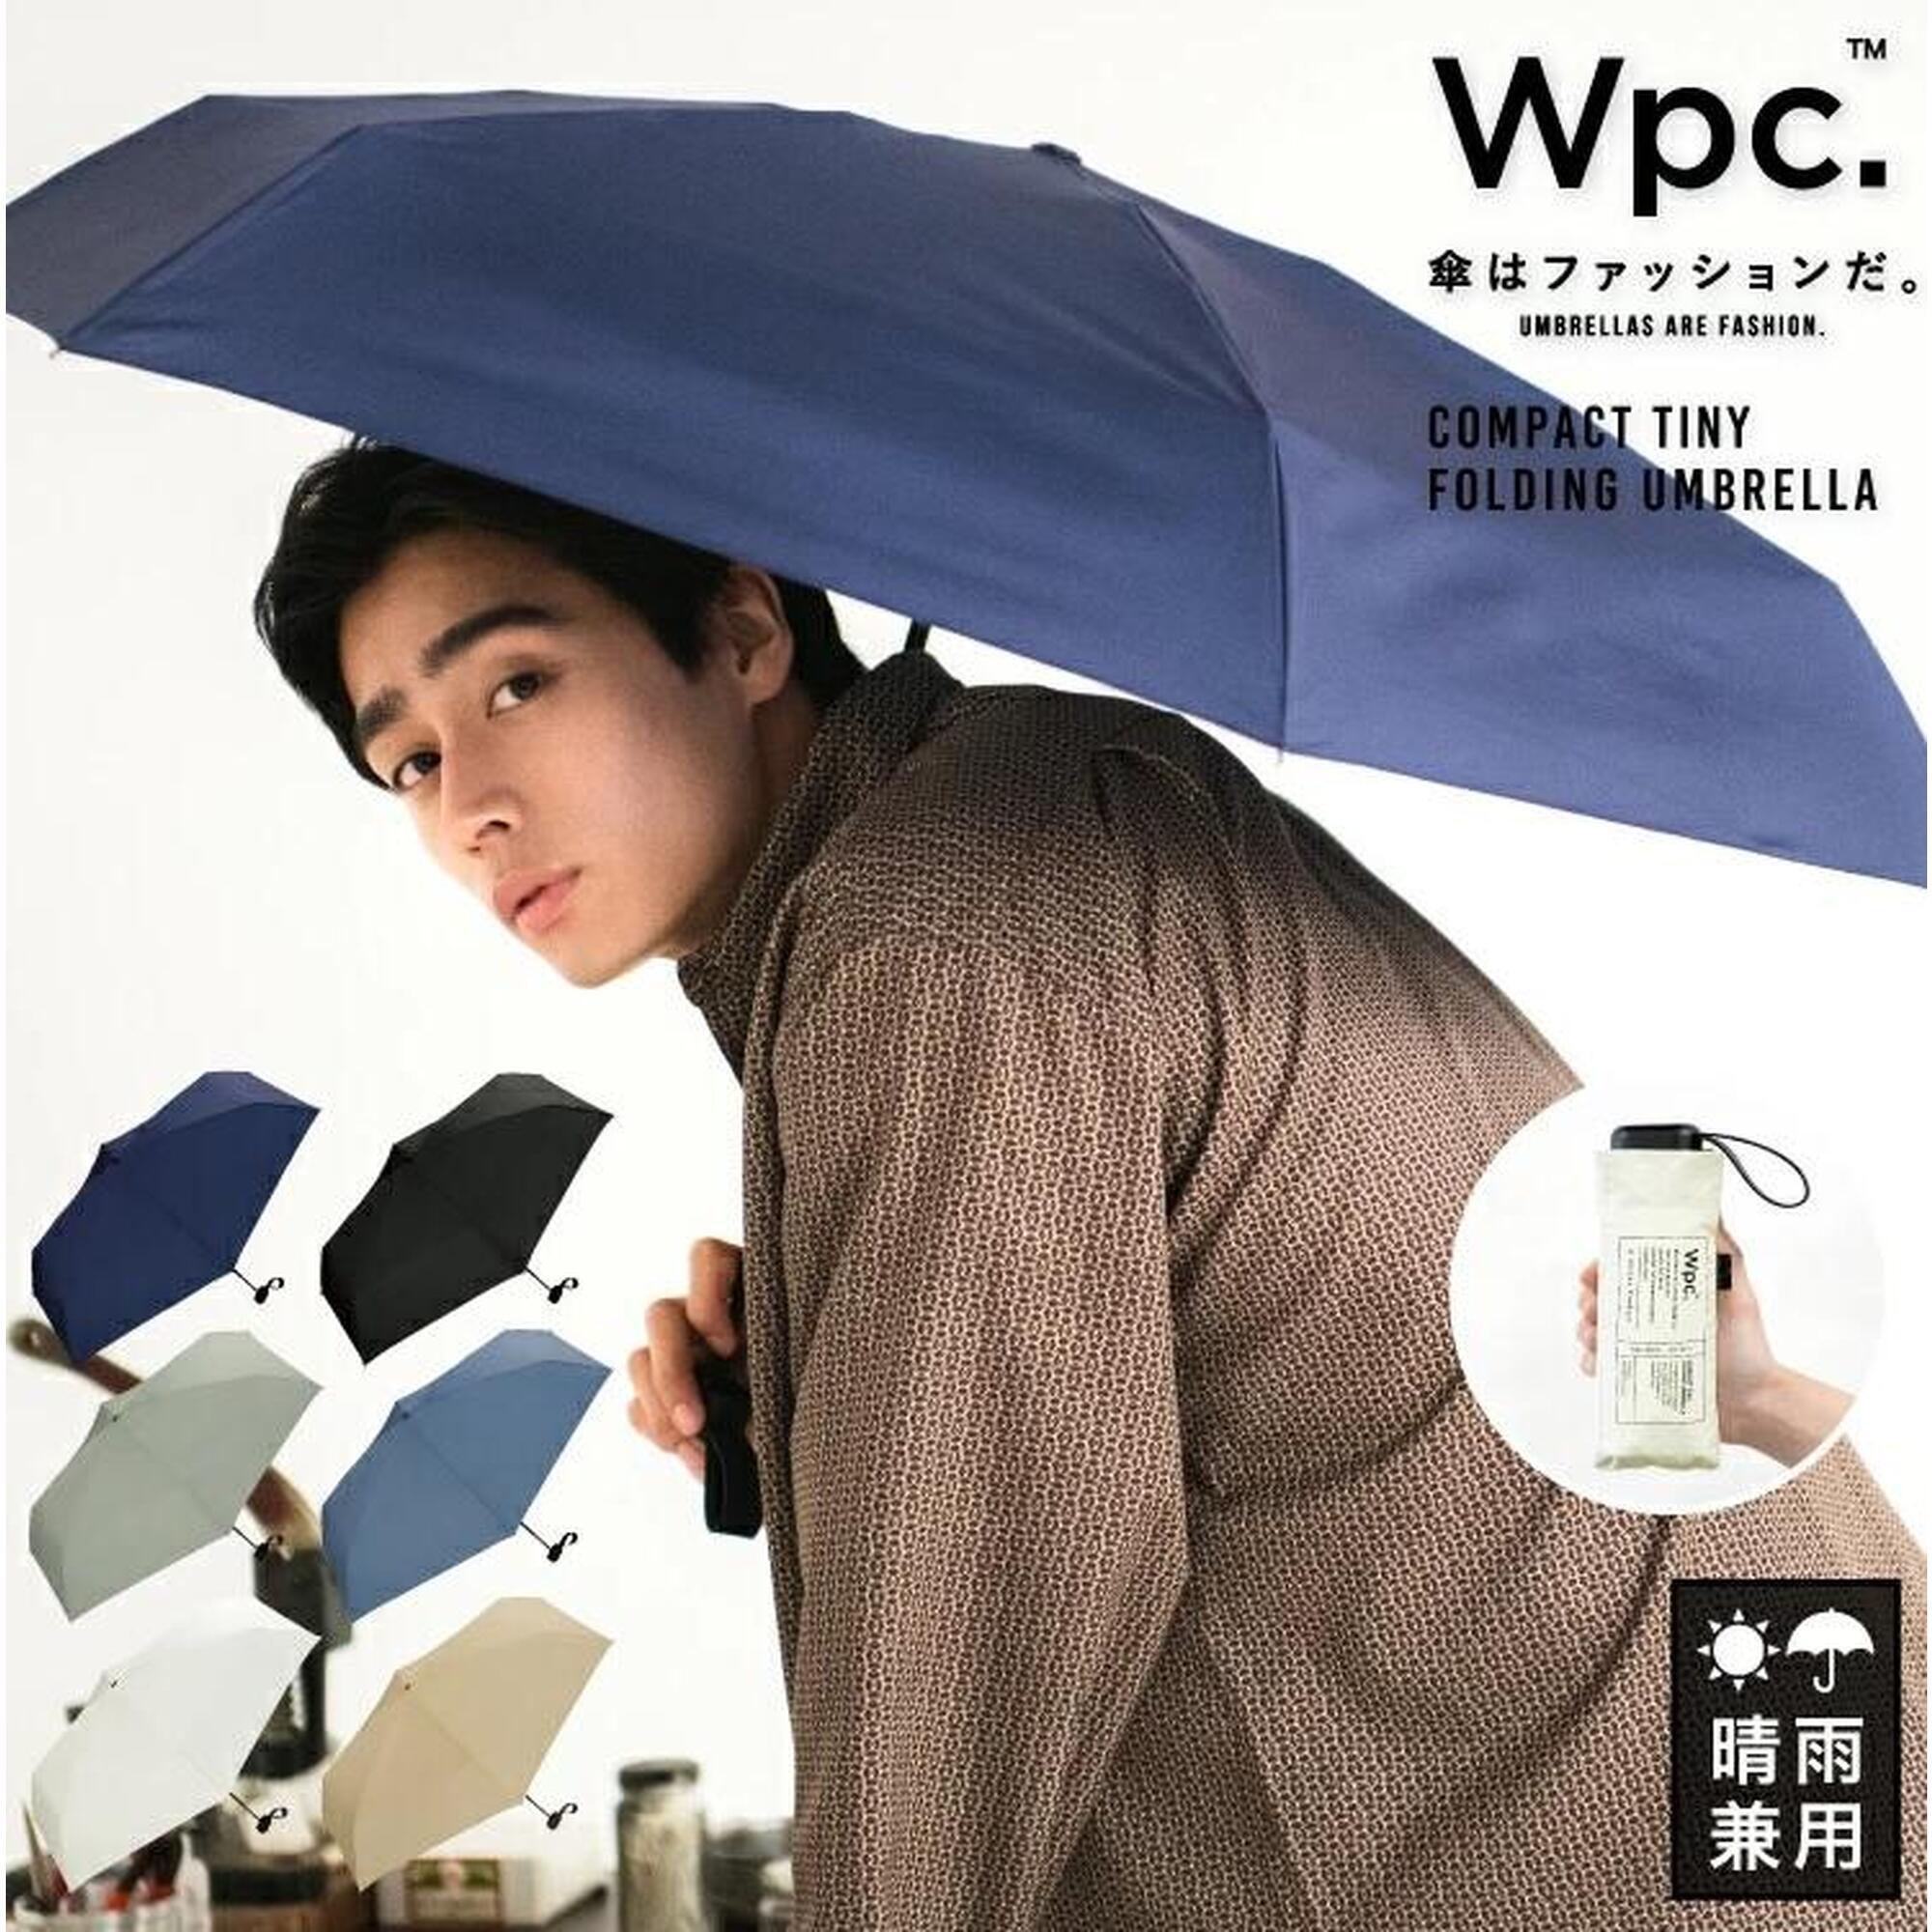 Compact Foldable Umbrella - Light Grey